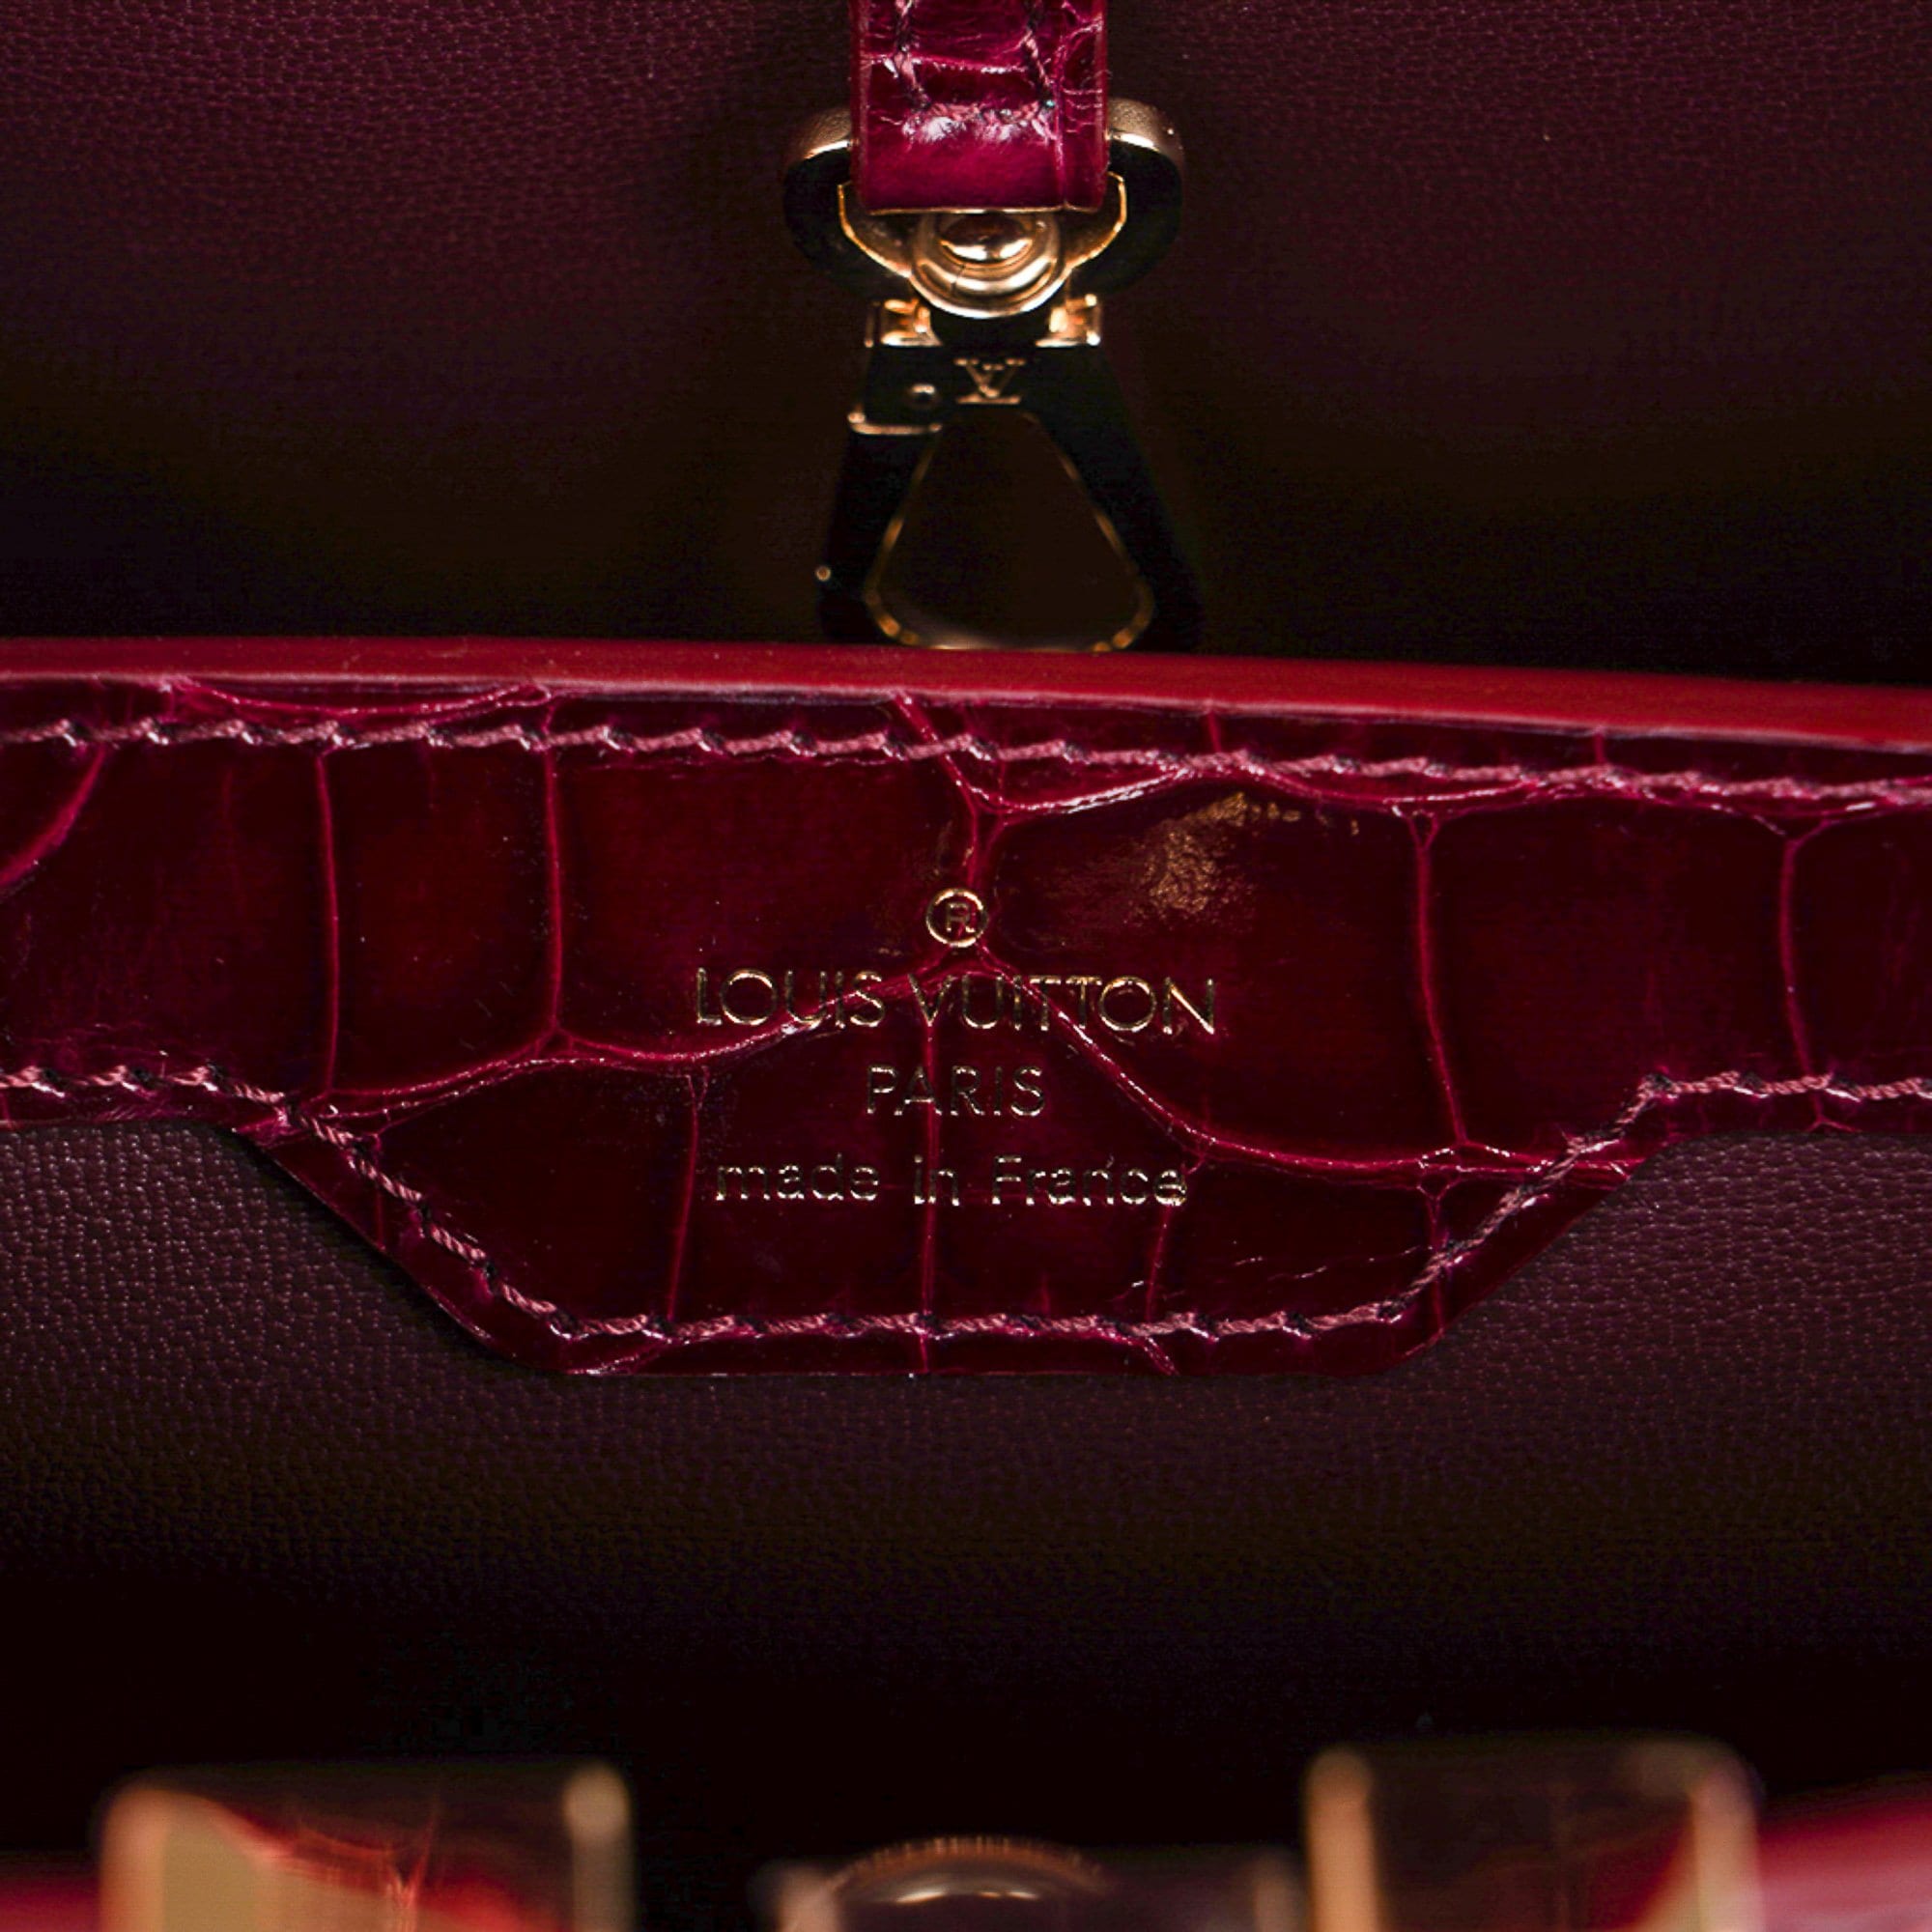 Louis Vuitton Cabin Suitcase - Red Rose Paris